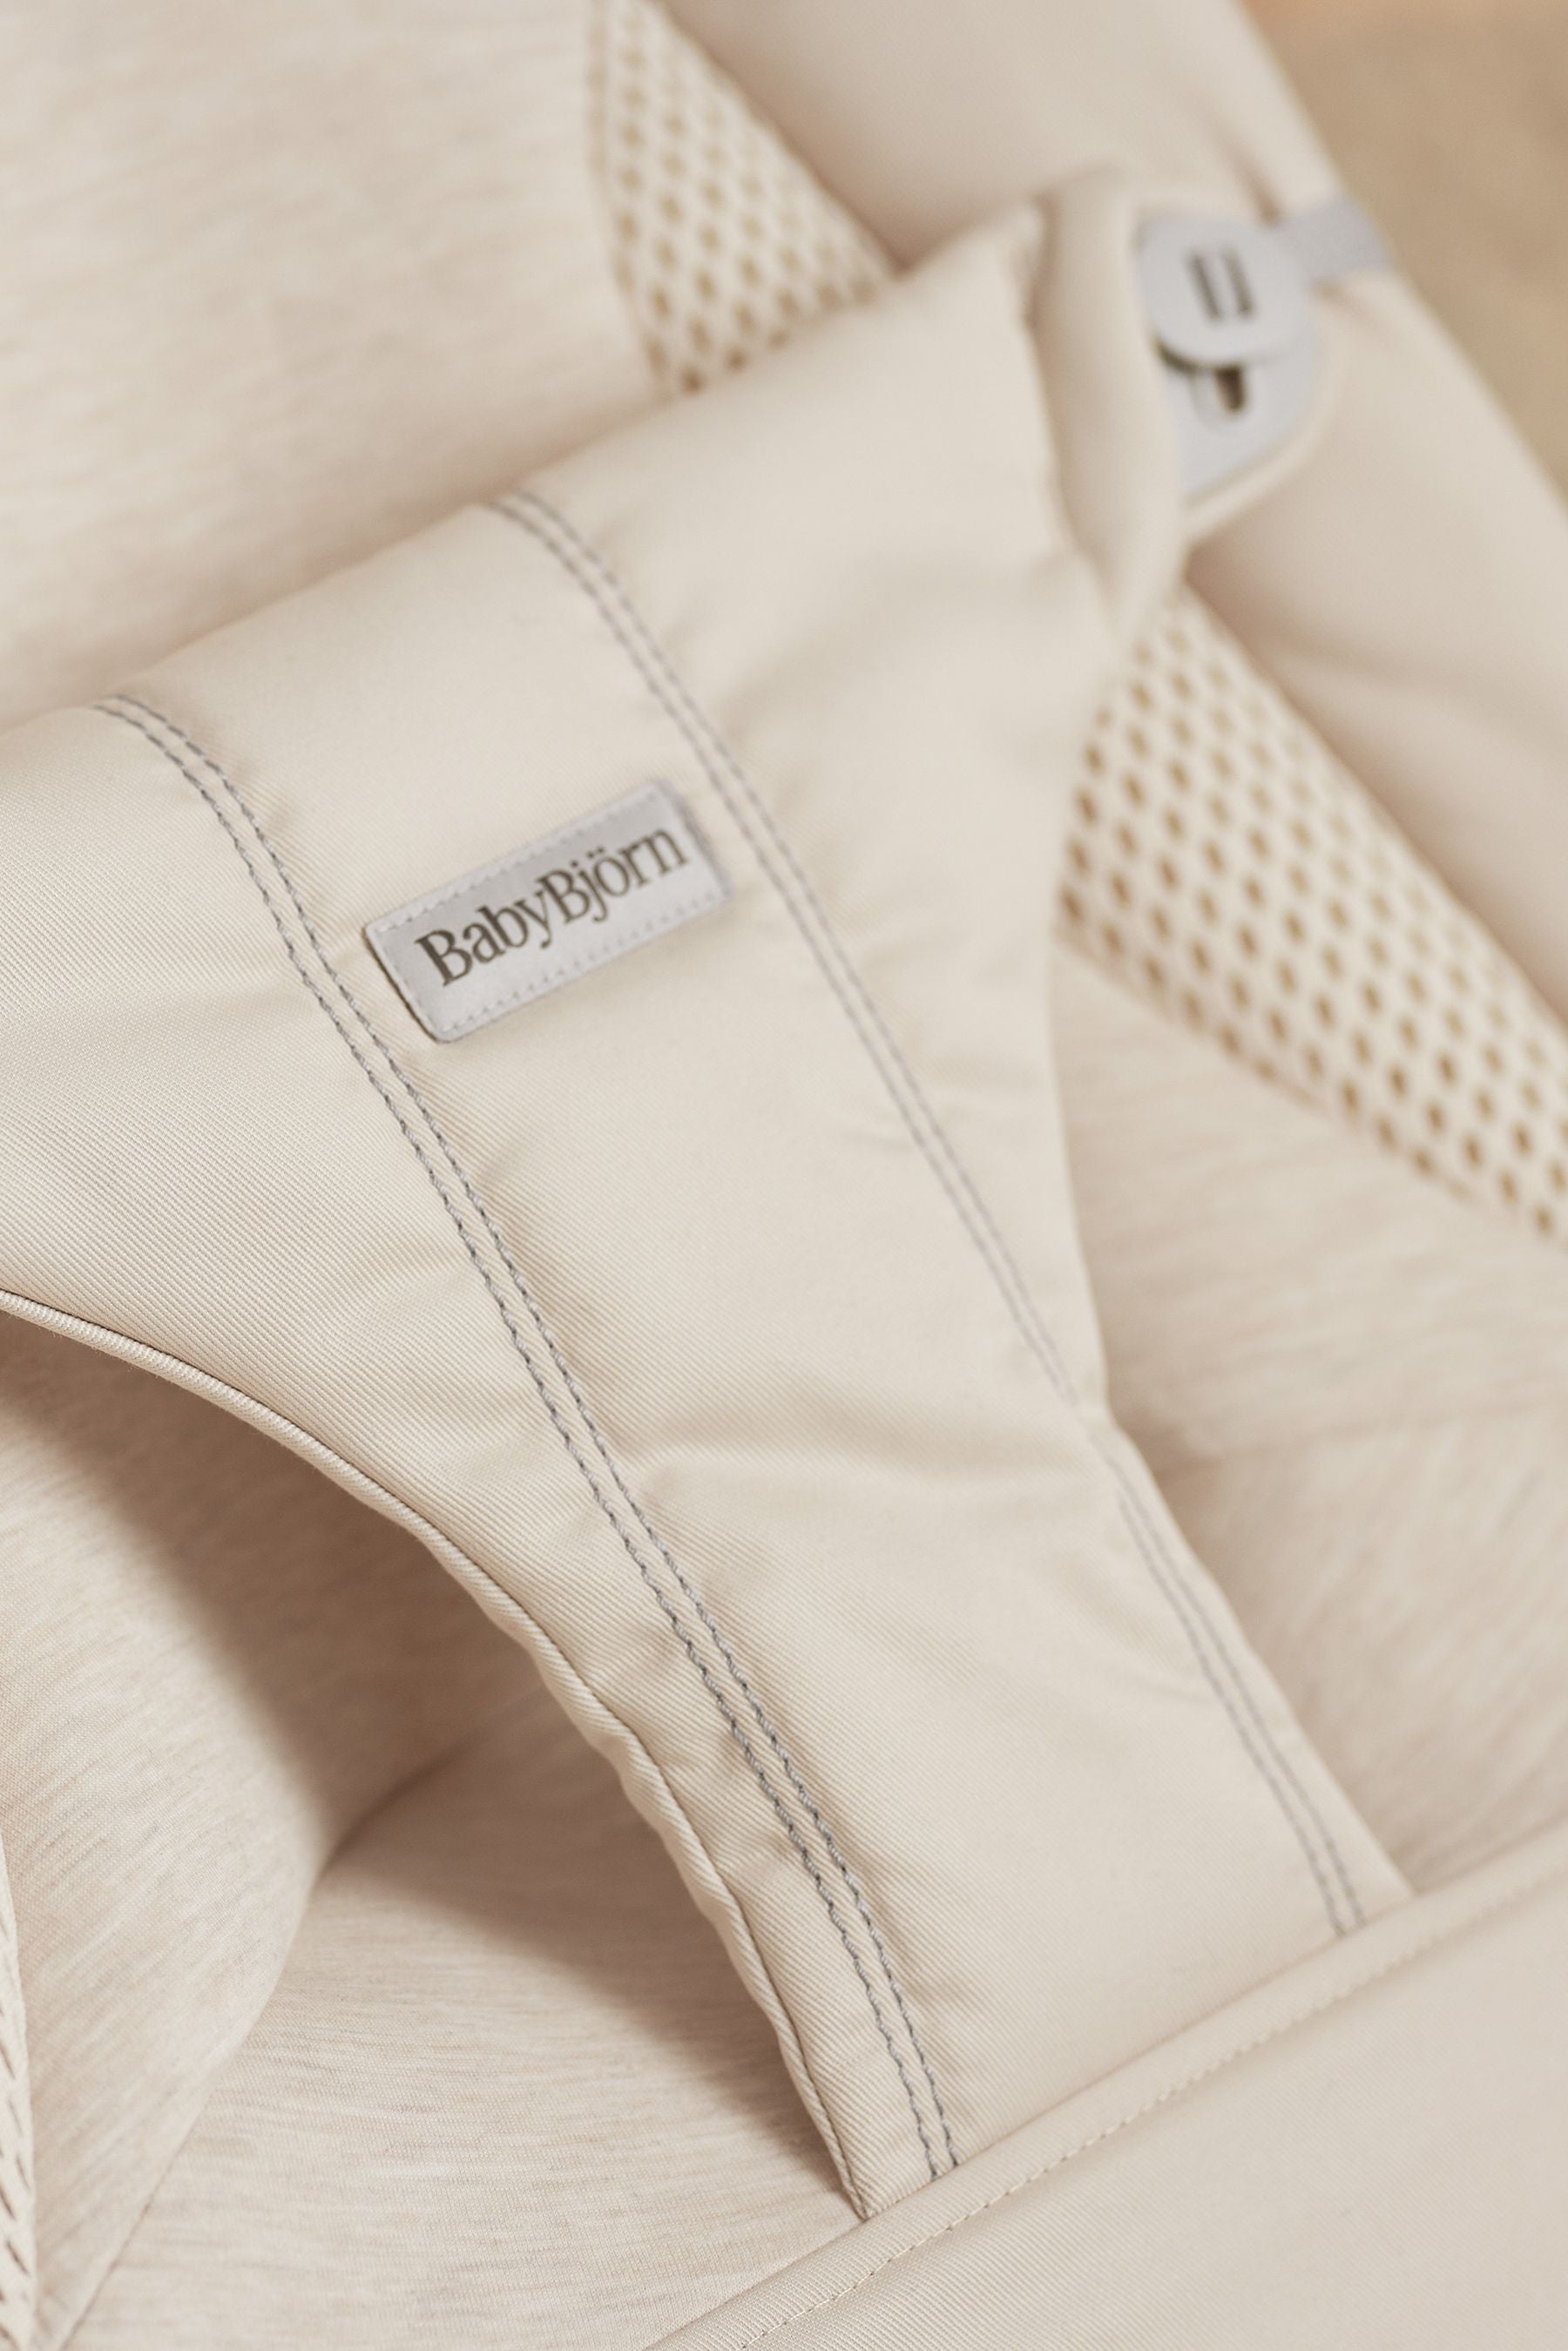 BabyBjorn Bouncer Balance Soft Cotton/Jersey - Tri-Fabric